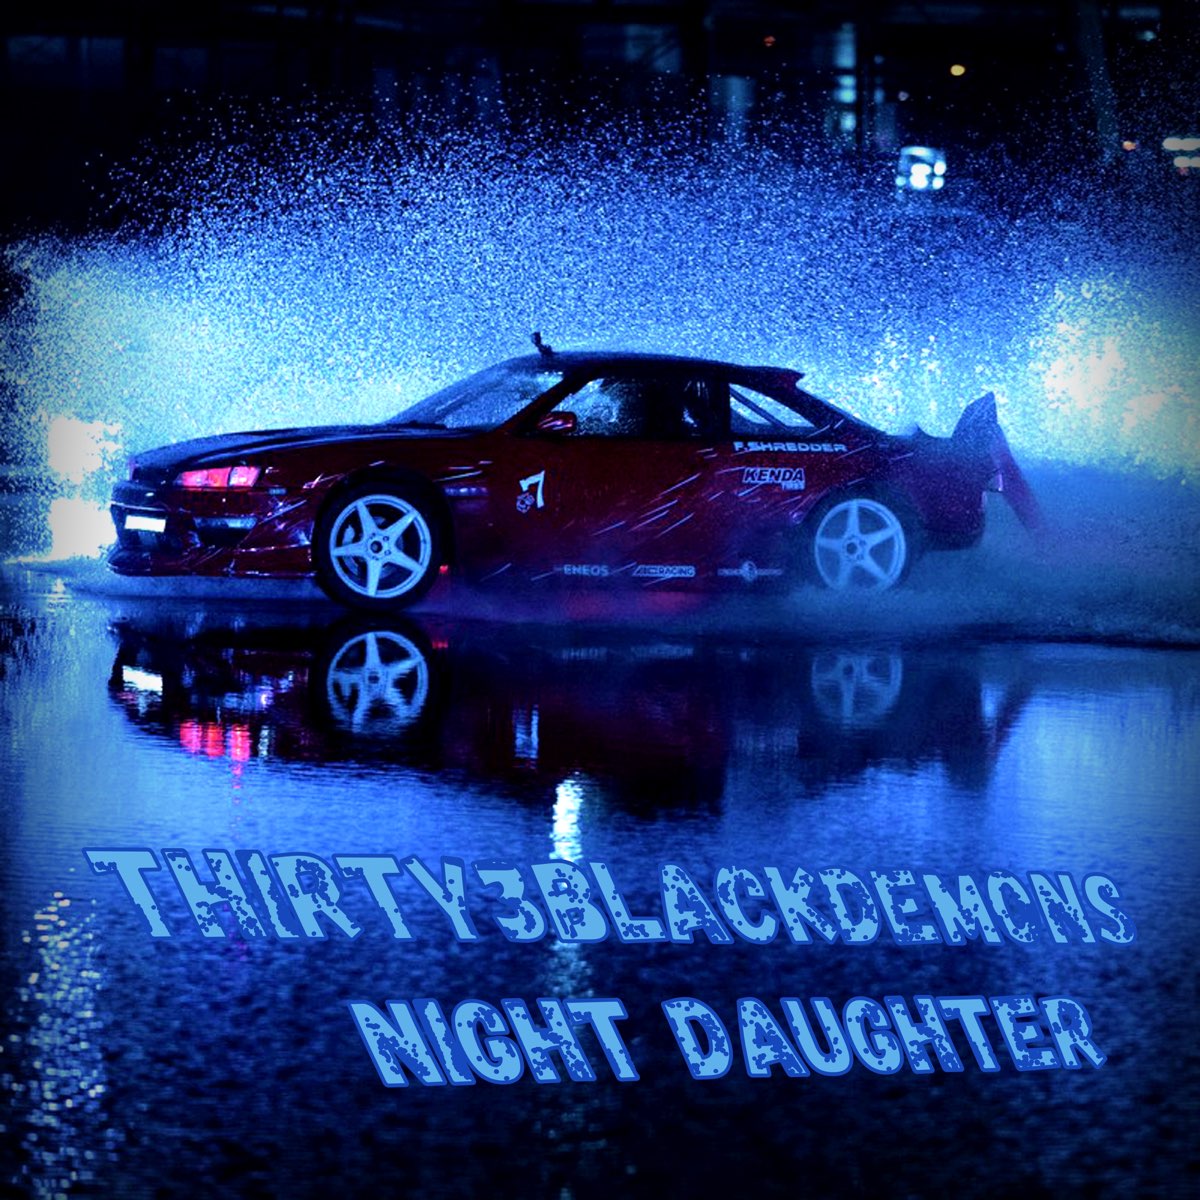 Daughter night